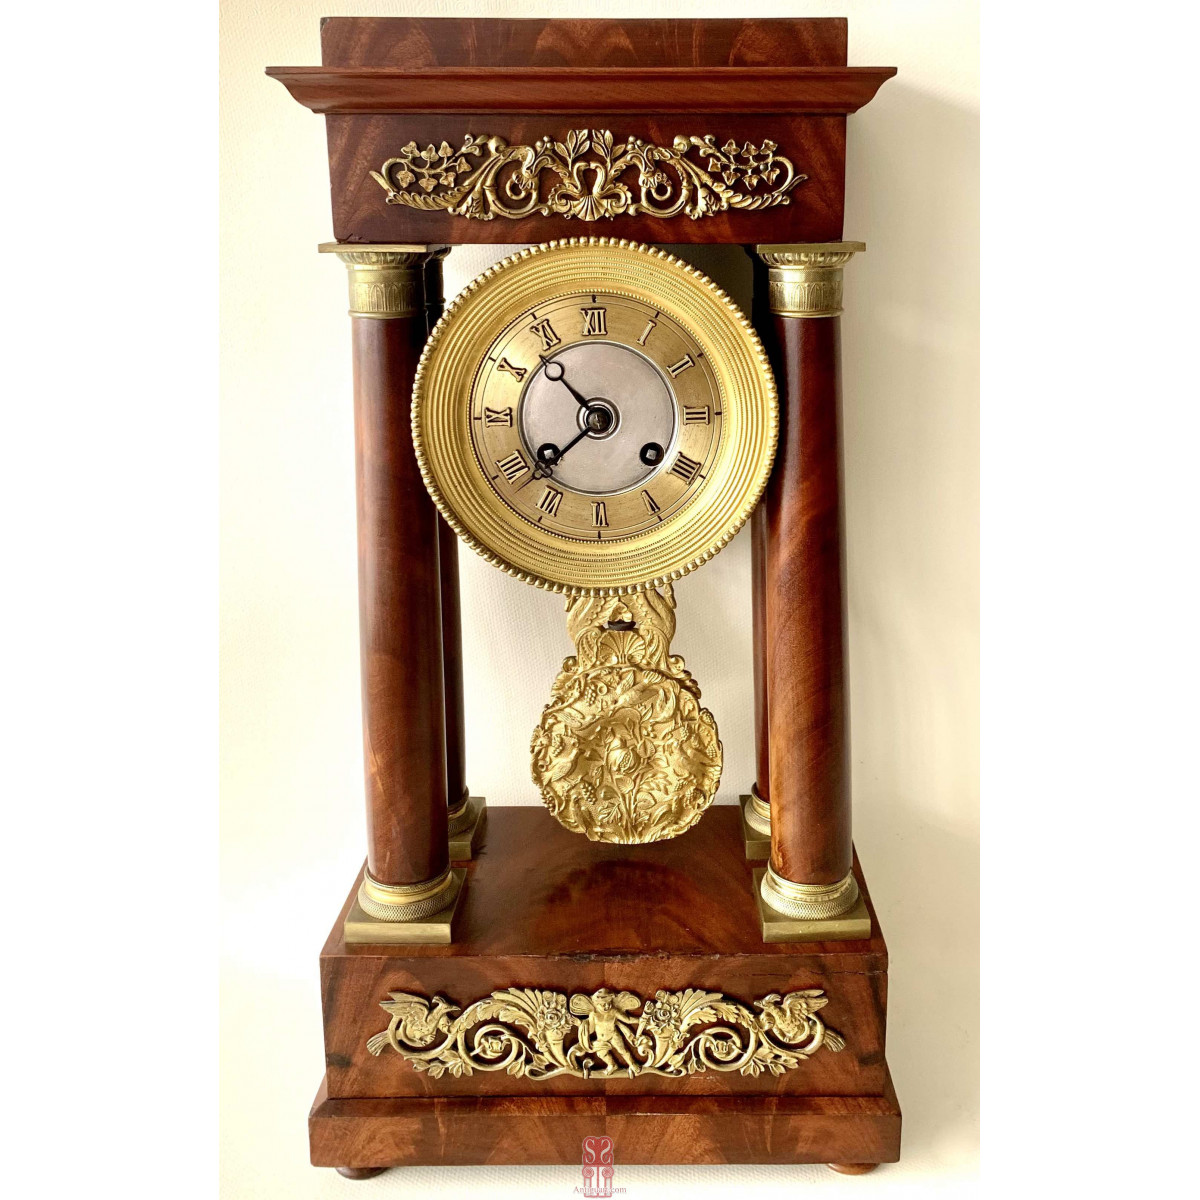 Reloj pendulo de sobre mesa, siglo XIX.